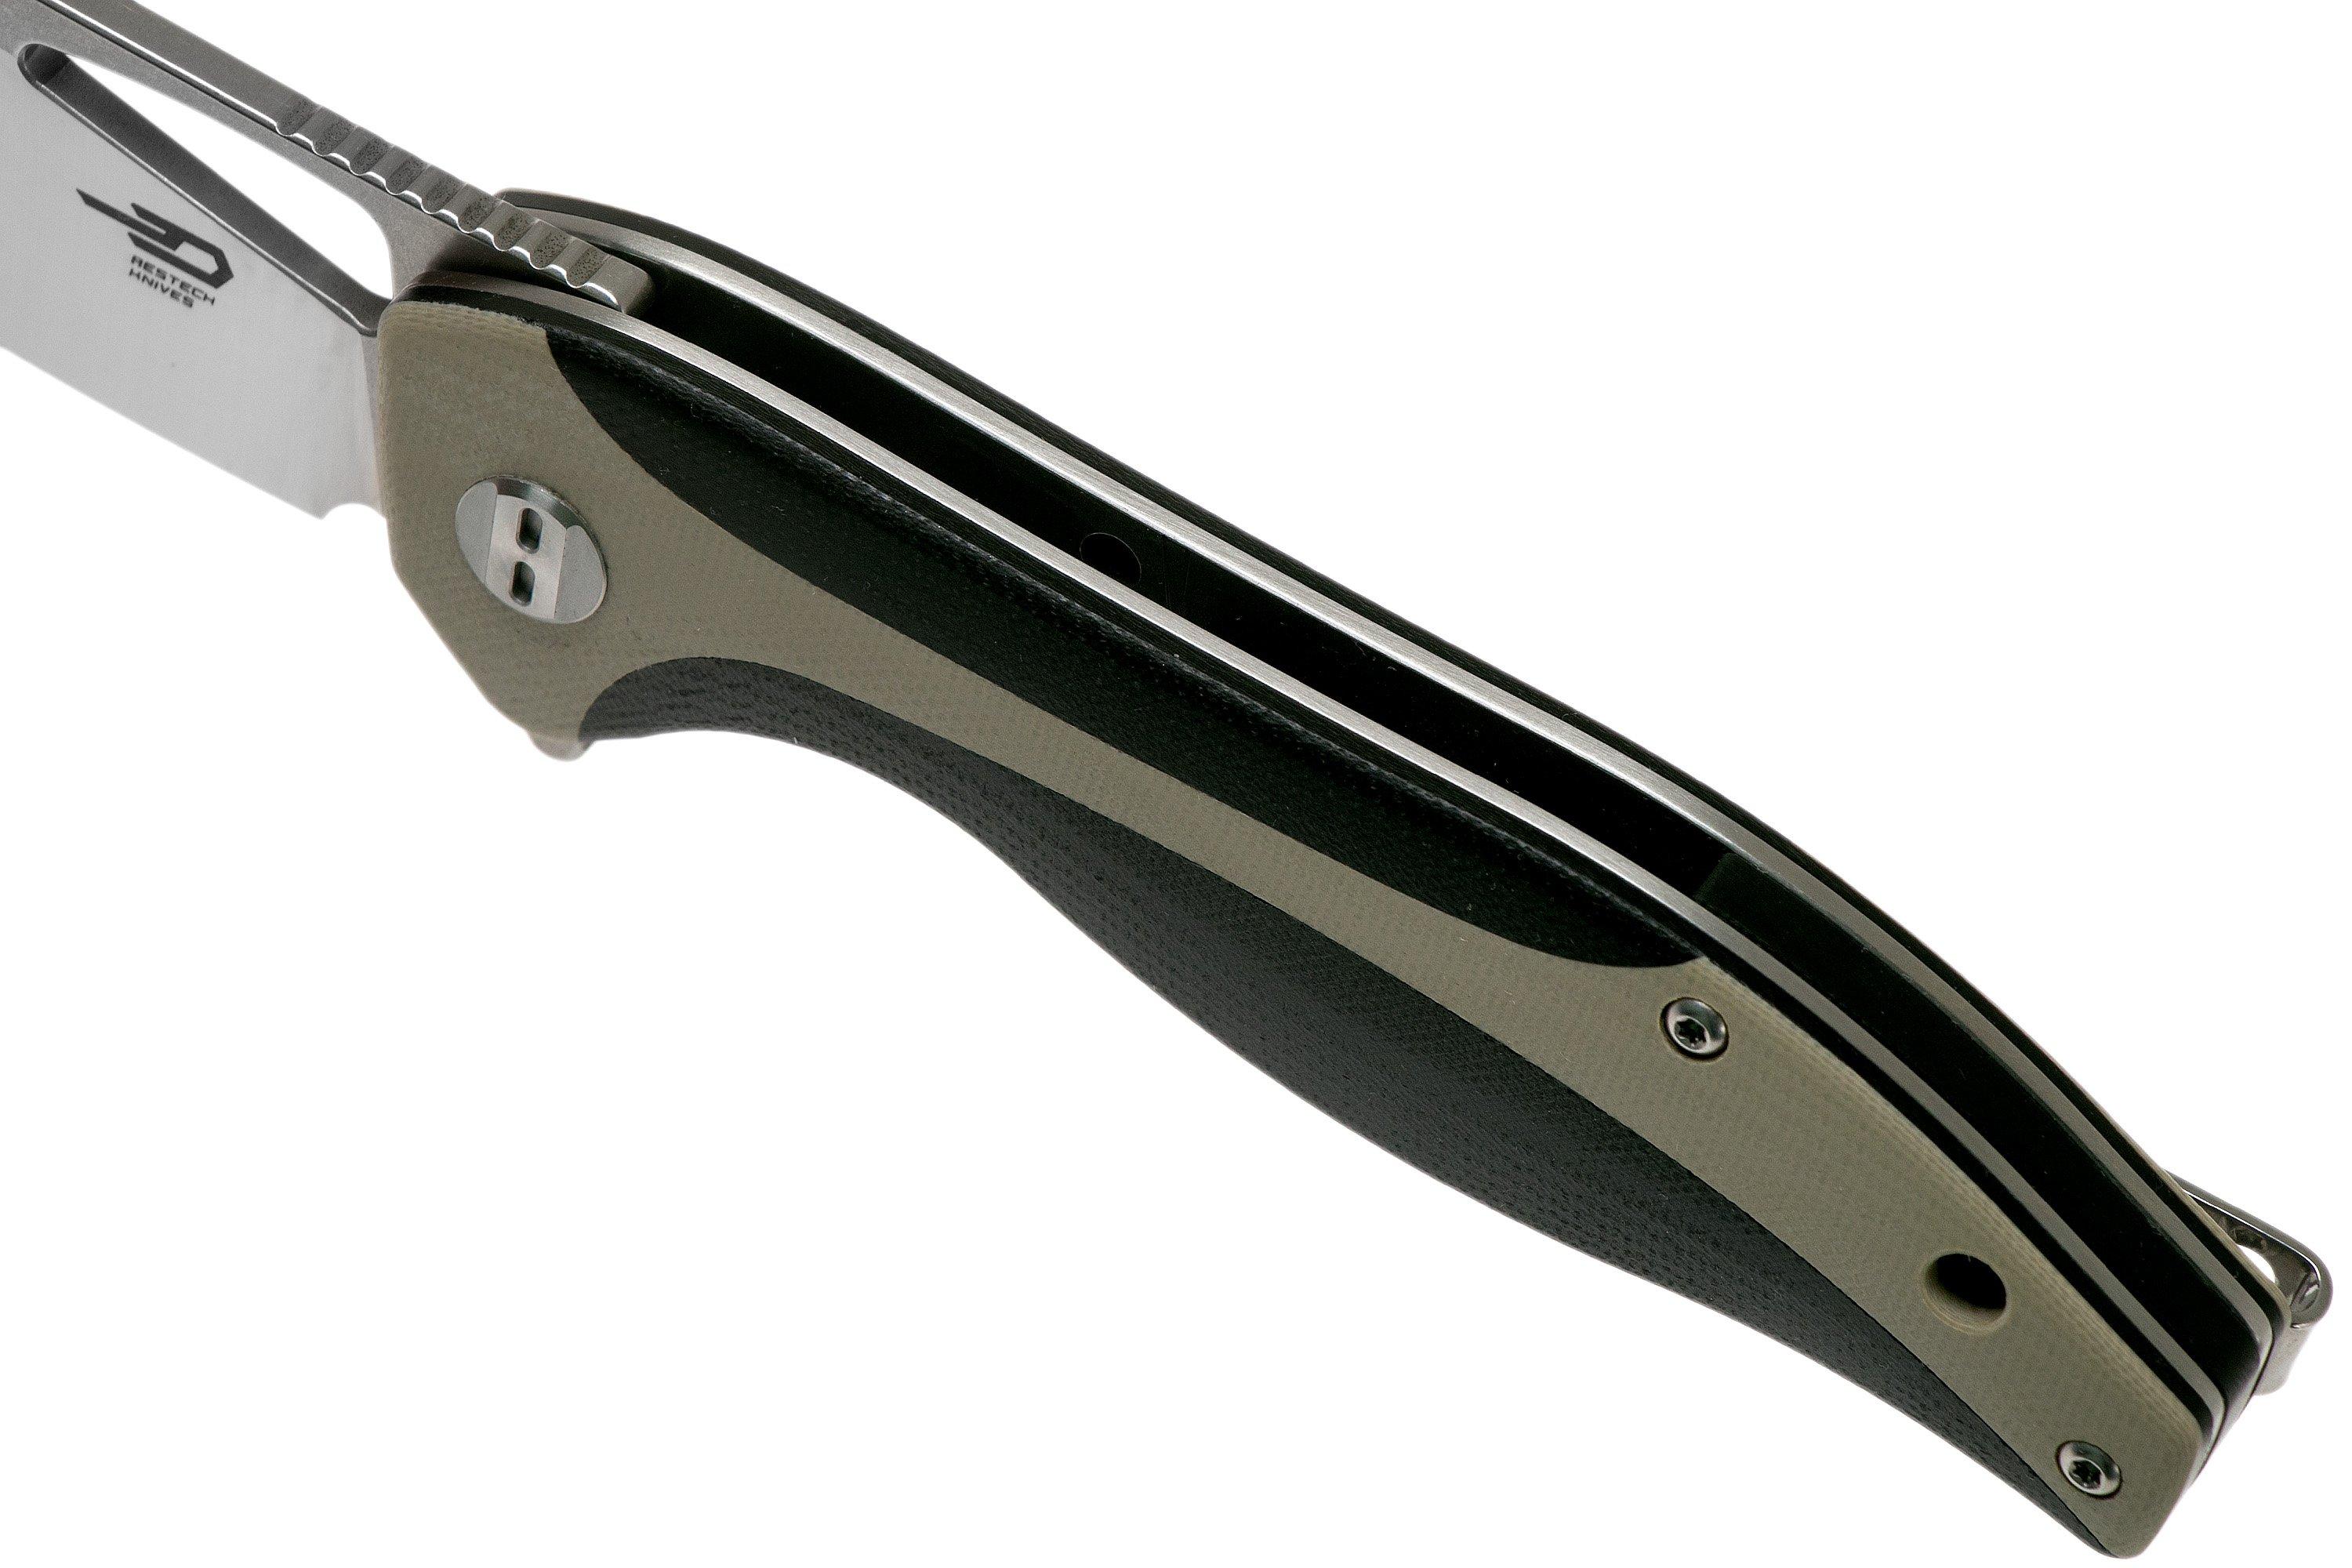 Bestech Komodo BG26B Black-Beige G10 pocket knife | Advantageously ...